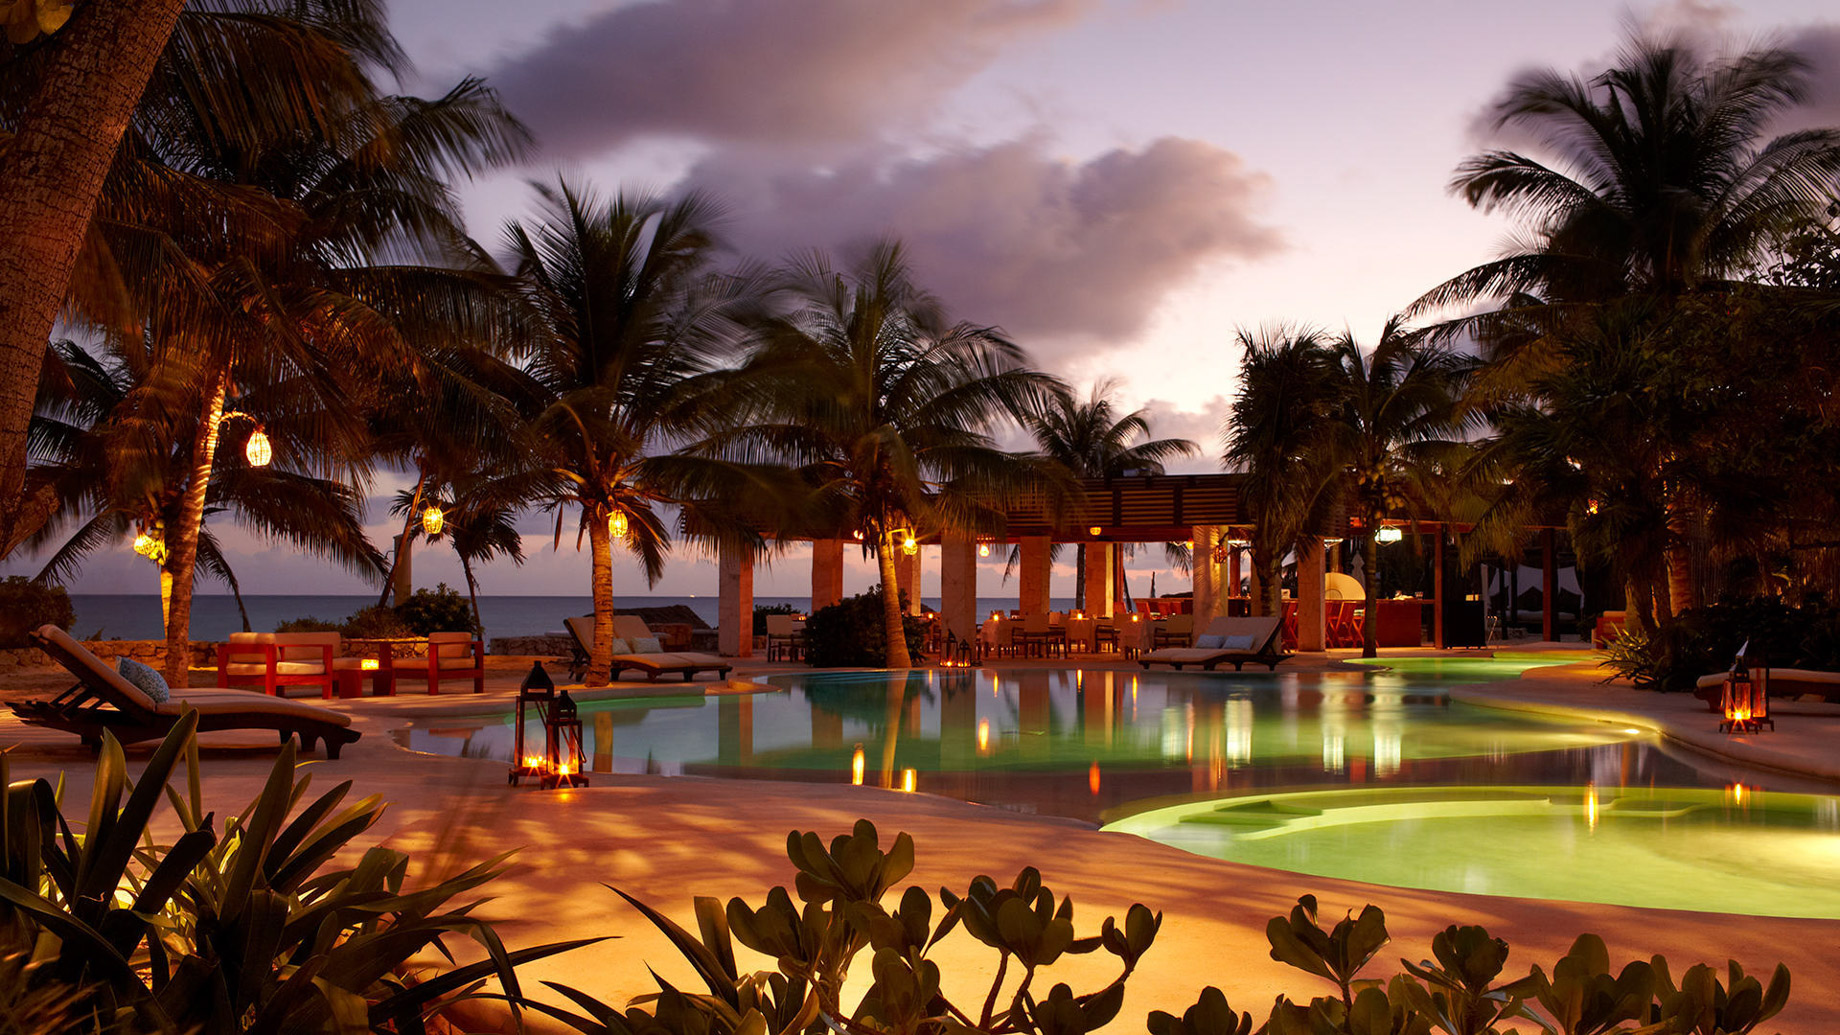 Viceroy Riviera Maya Resort - Playa del Carmen, Mexico - Pool Deck Sunset